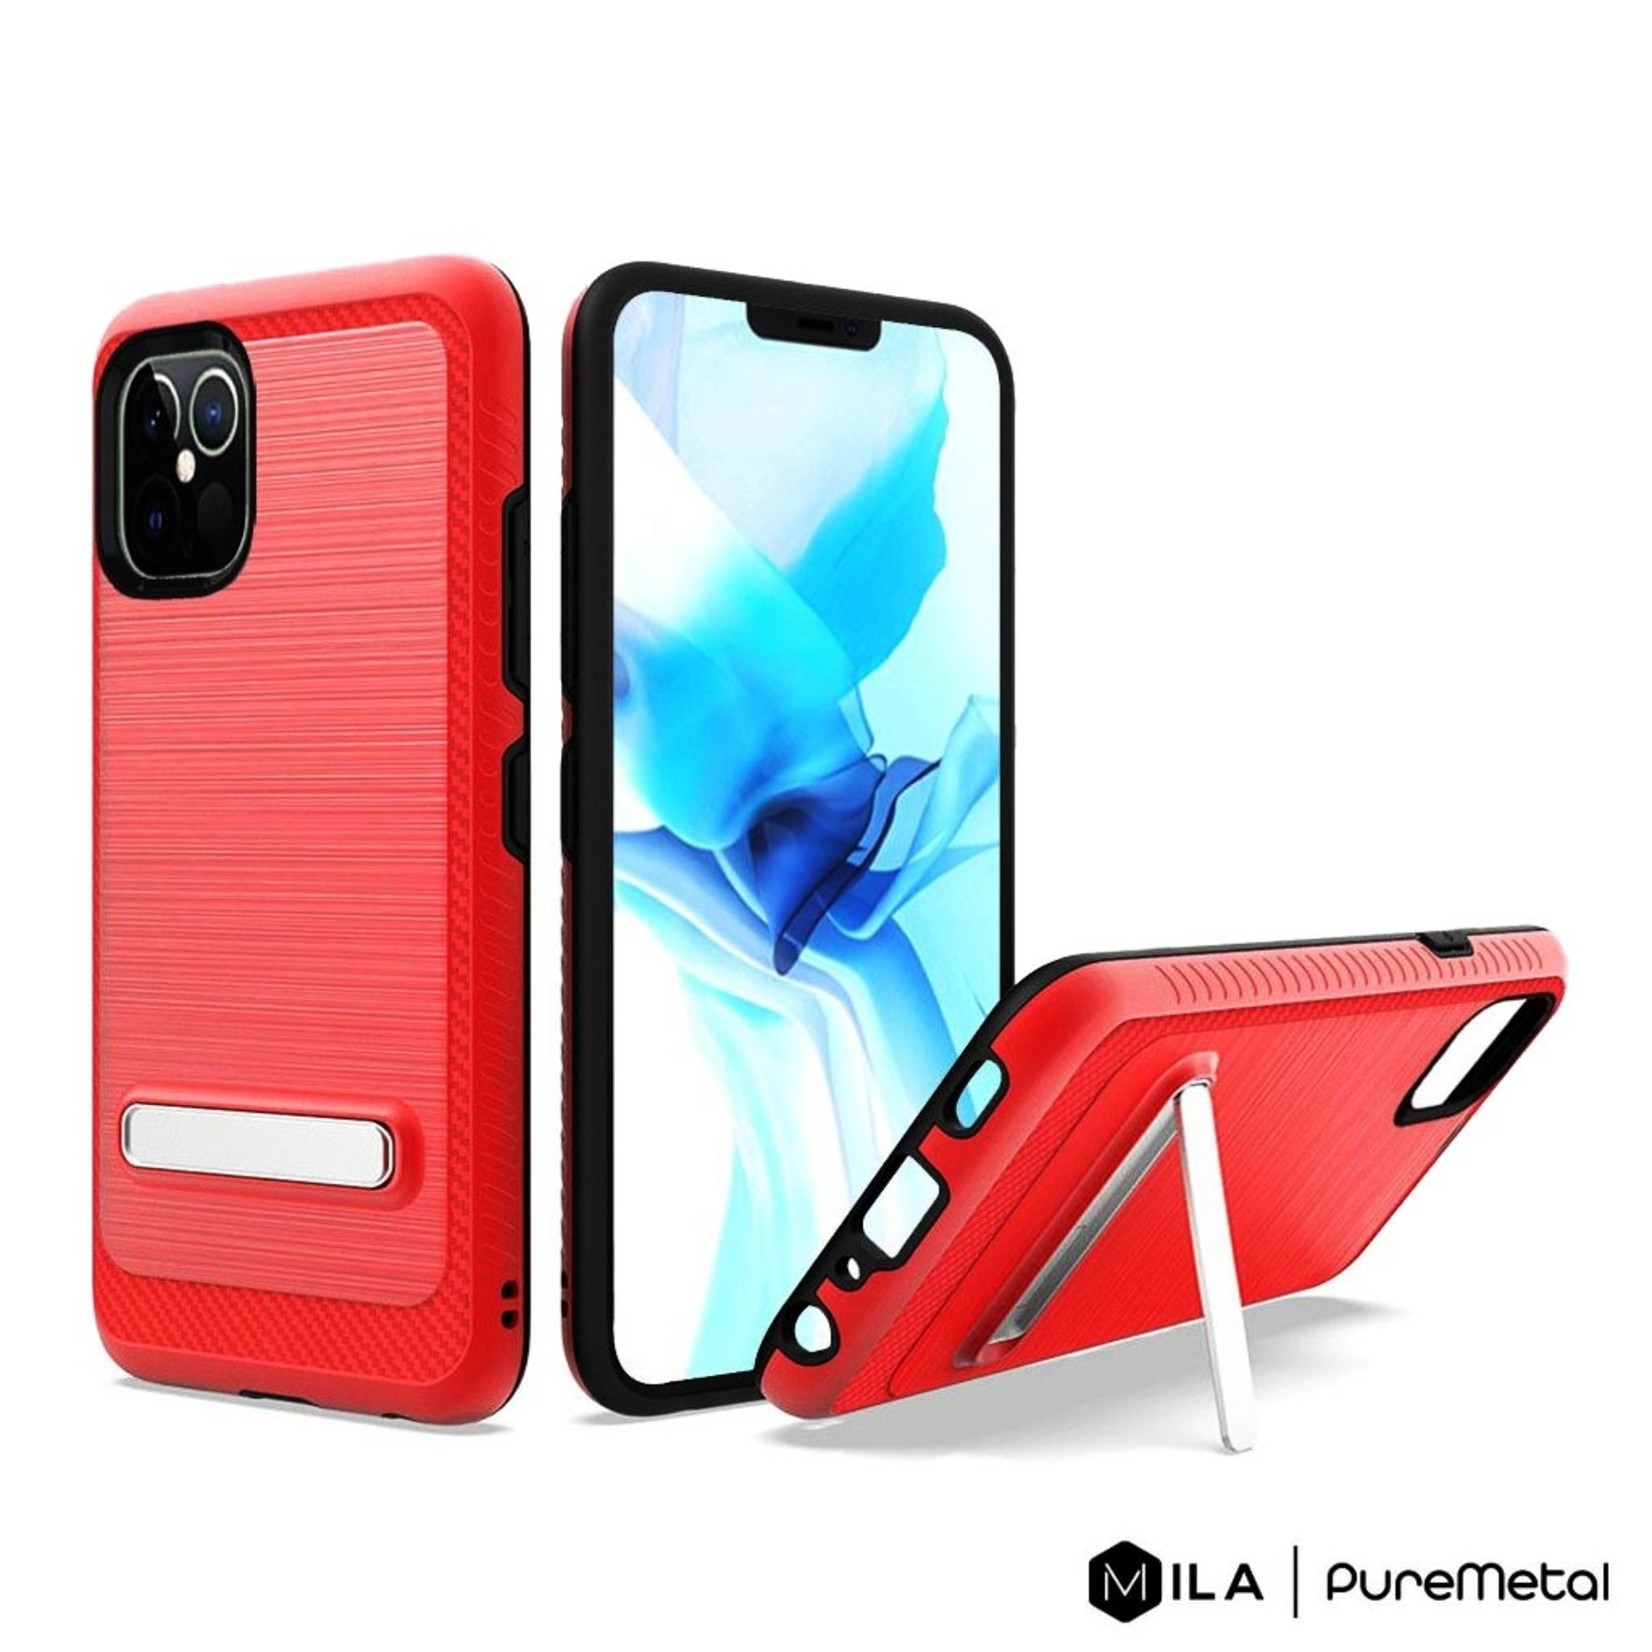 MILA | PureMetal Case for iPhone 12 Pro Max